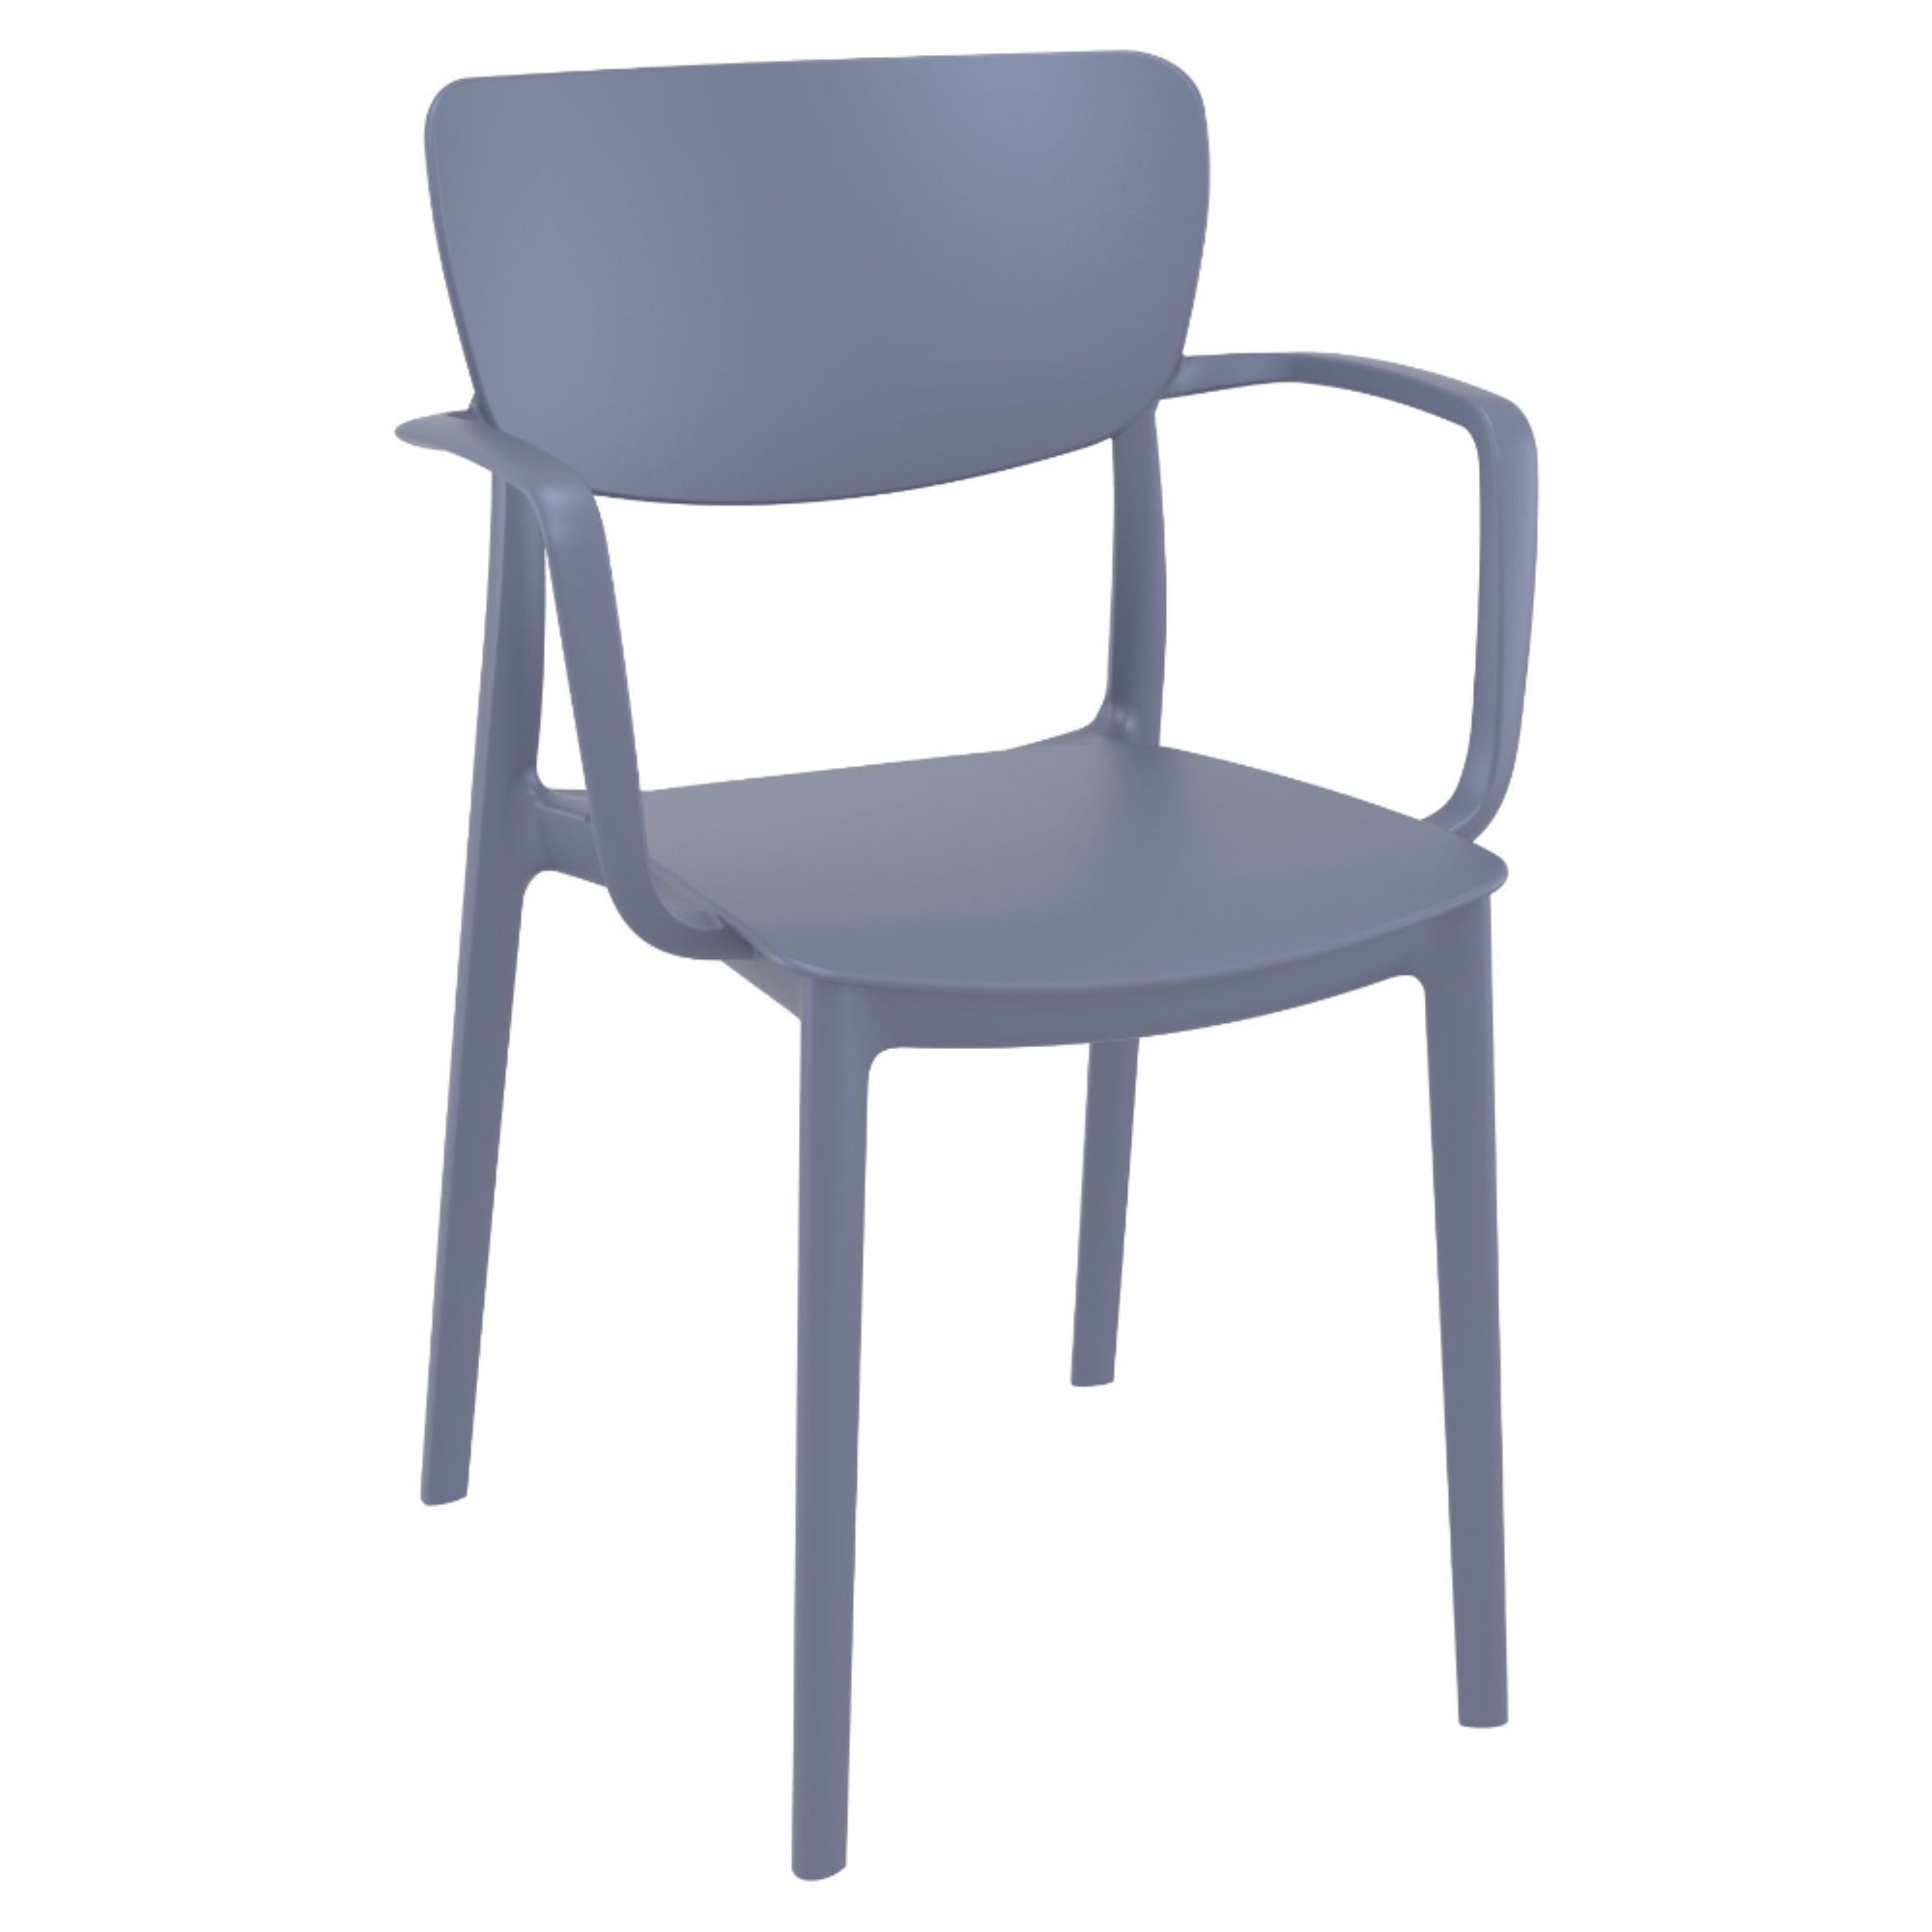 Isp126-dgr Lisa Outdoor Dining Arm Chair - Dark Gray